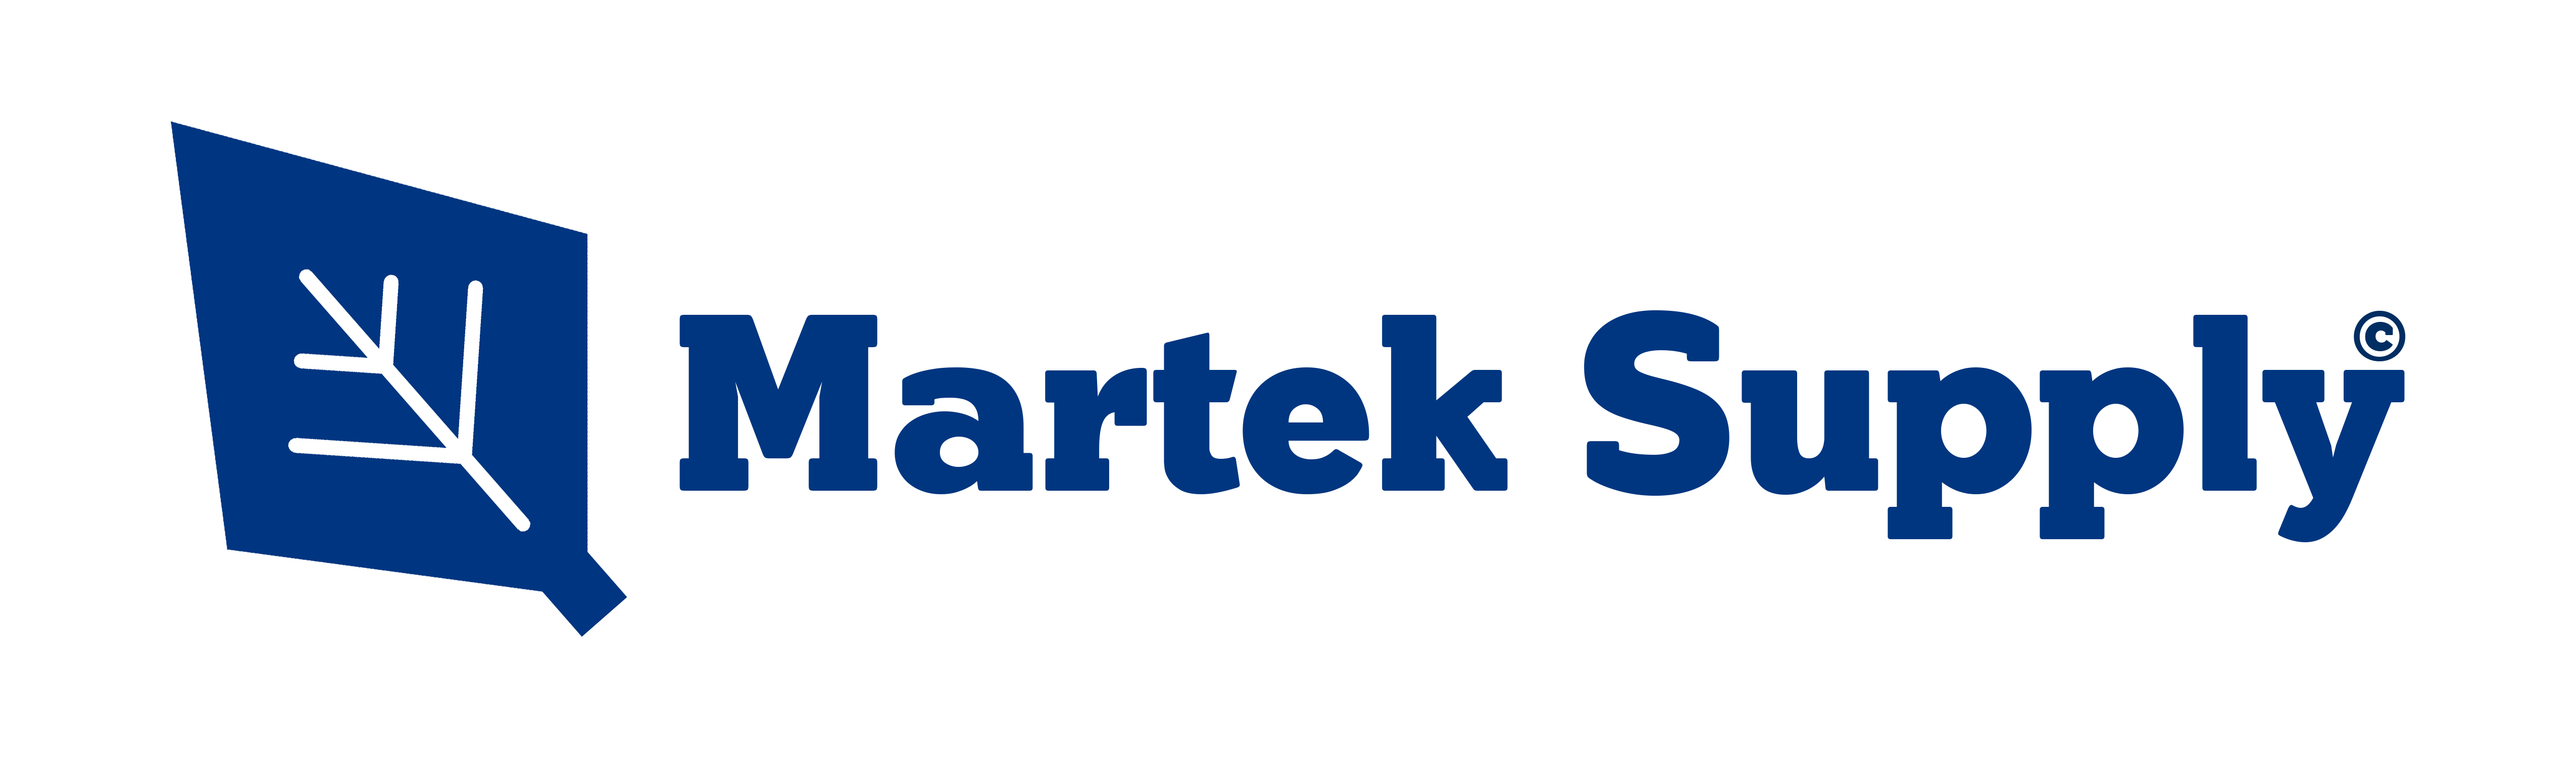 martek supply logo